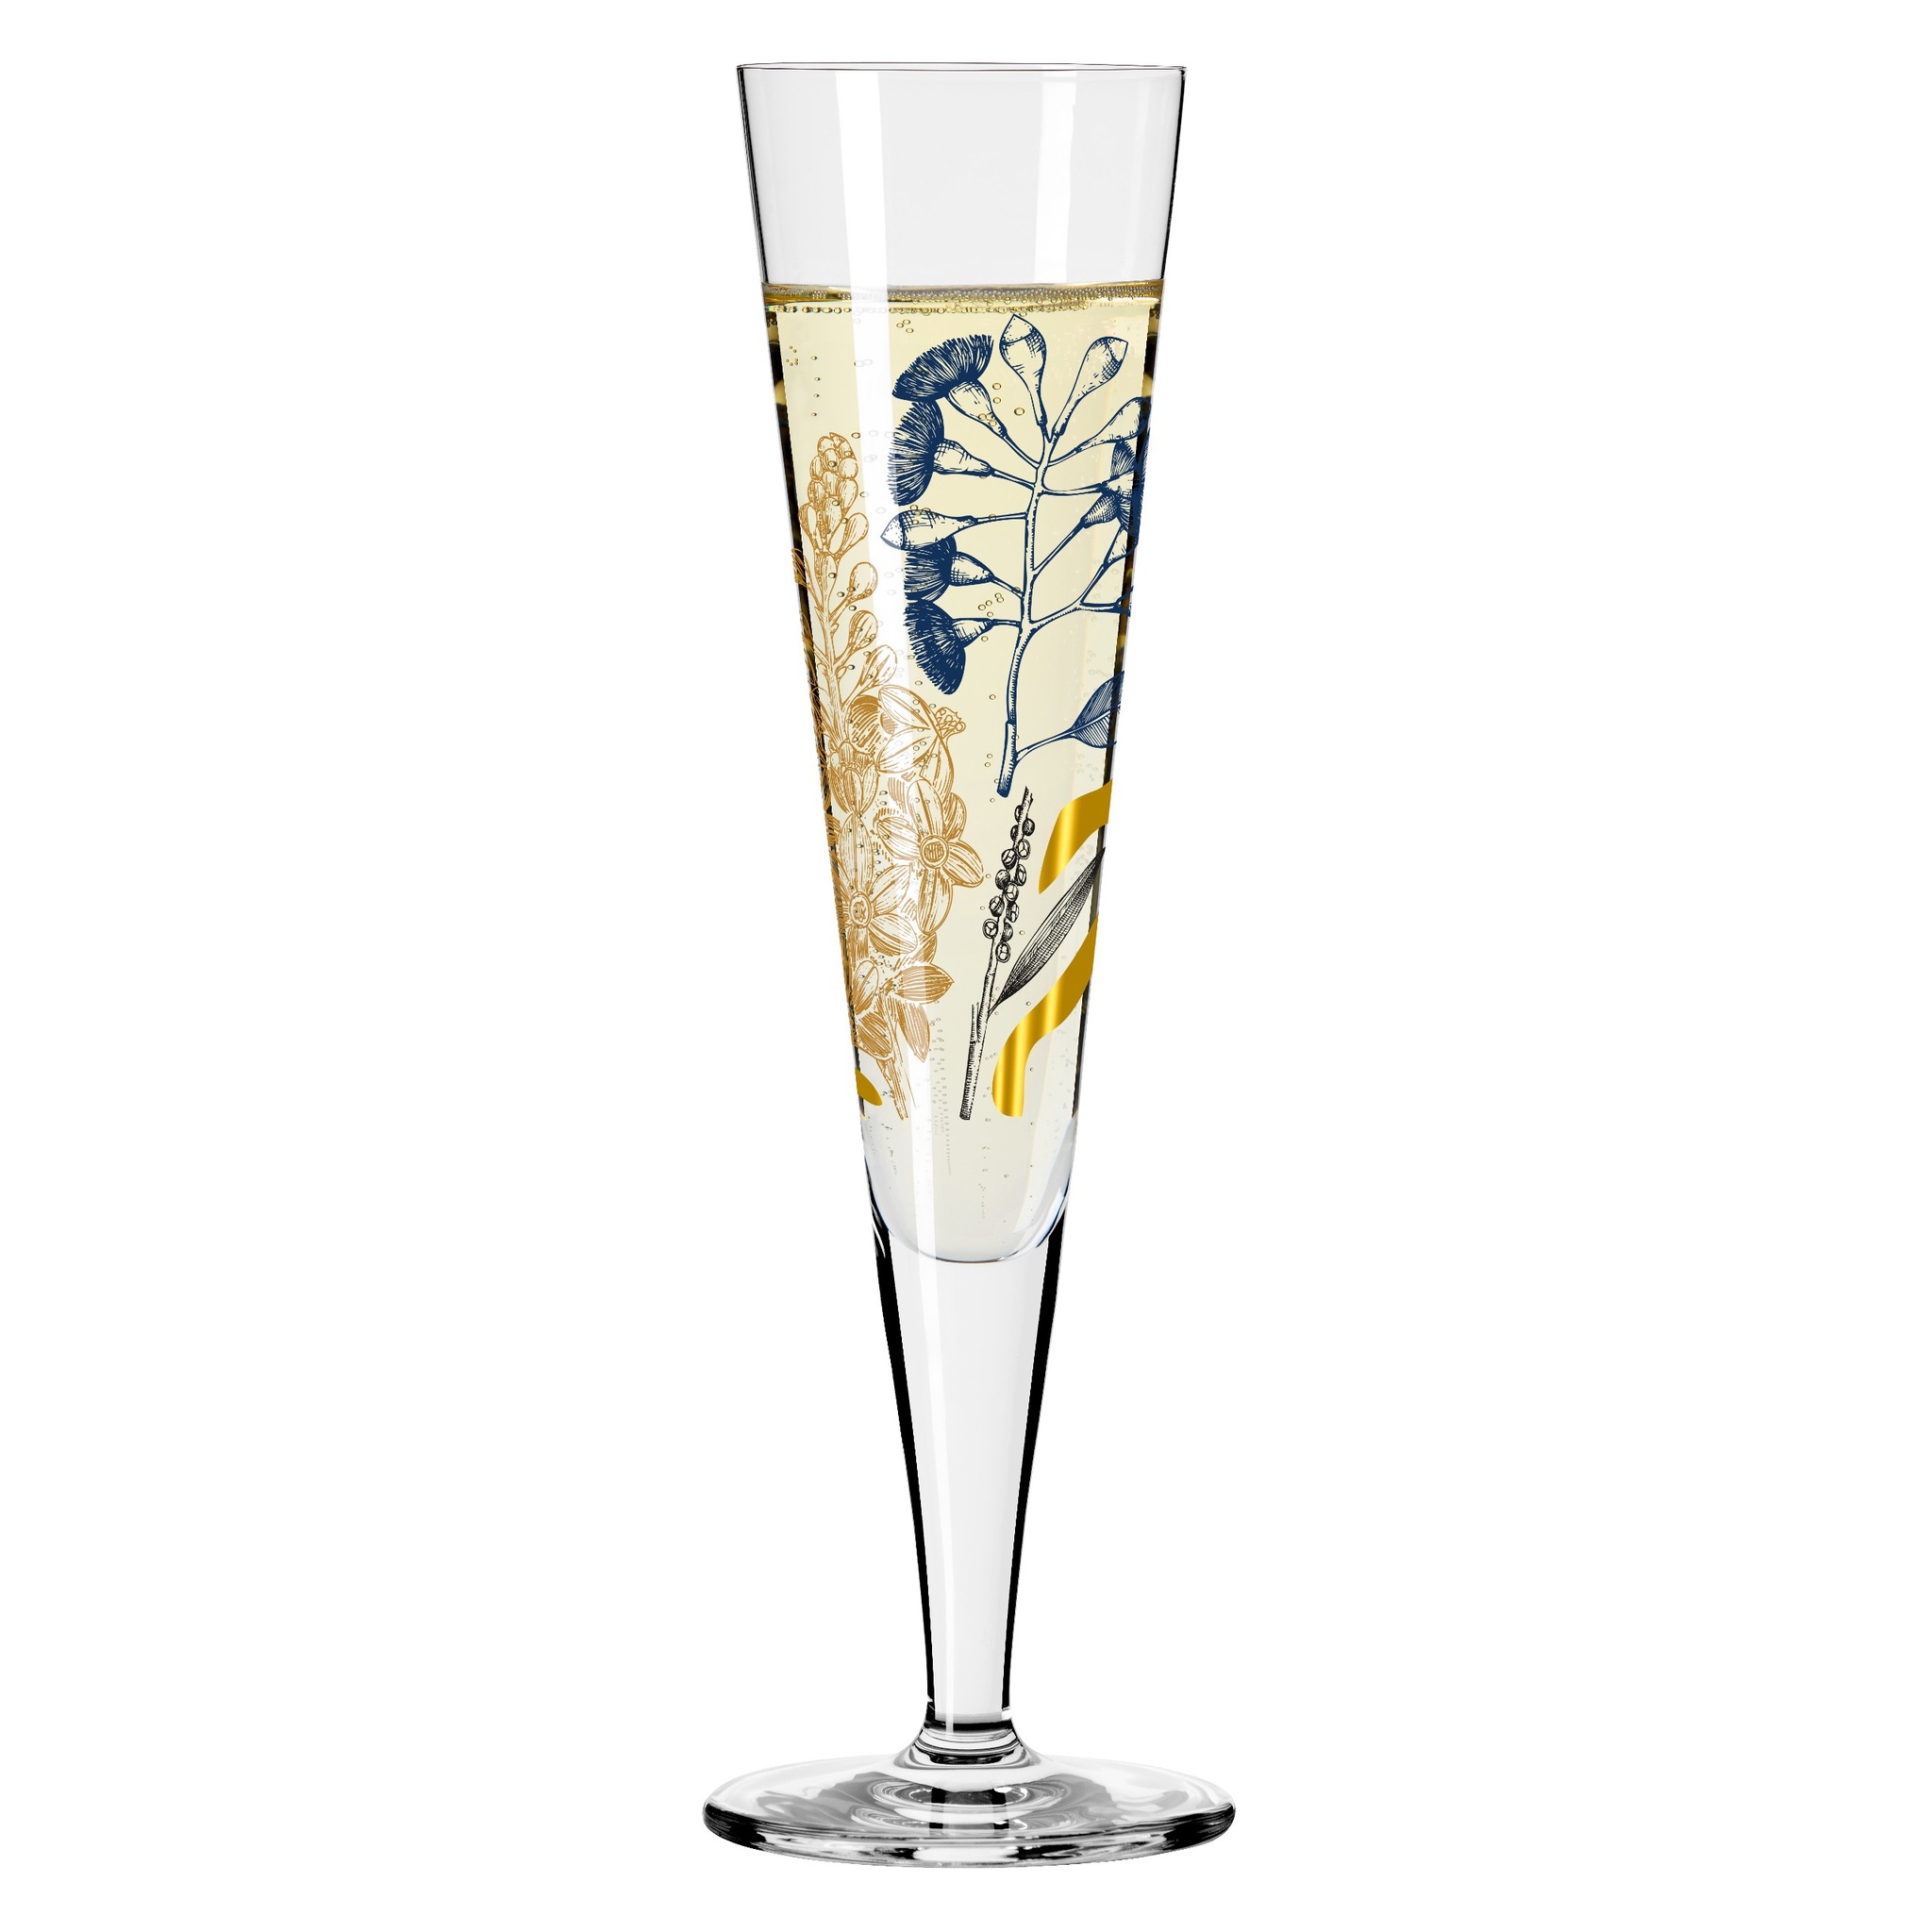 Goldnacht Champagneglas NO:34